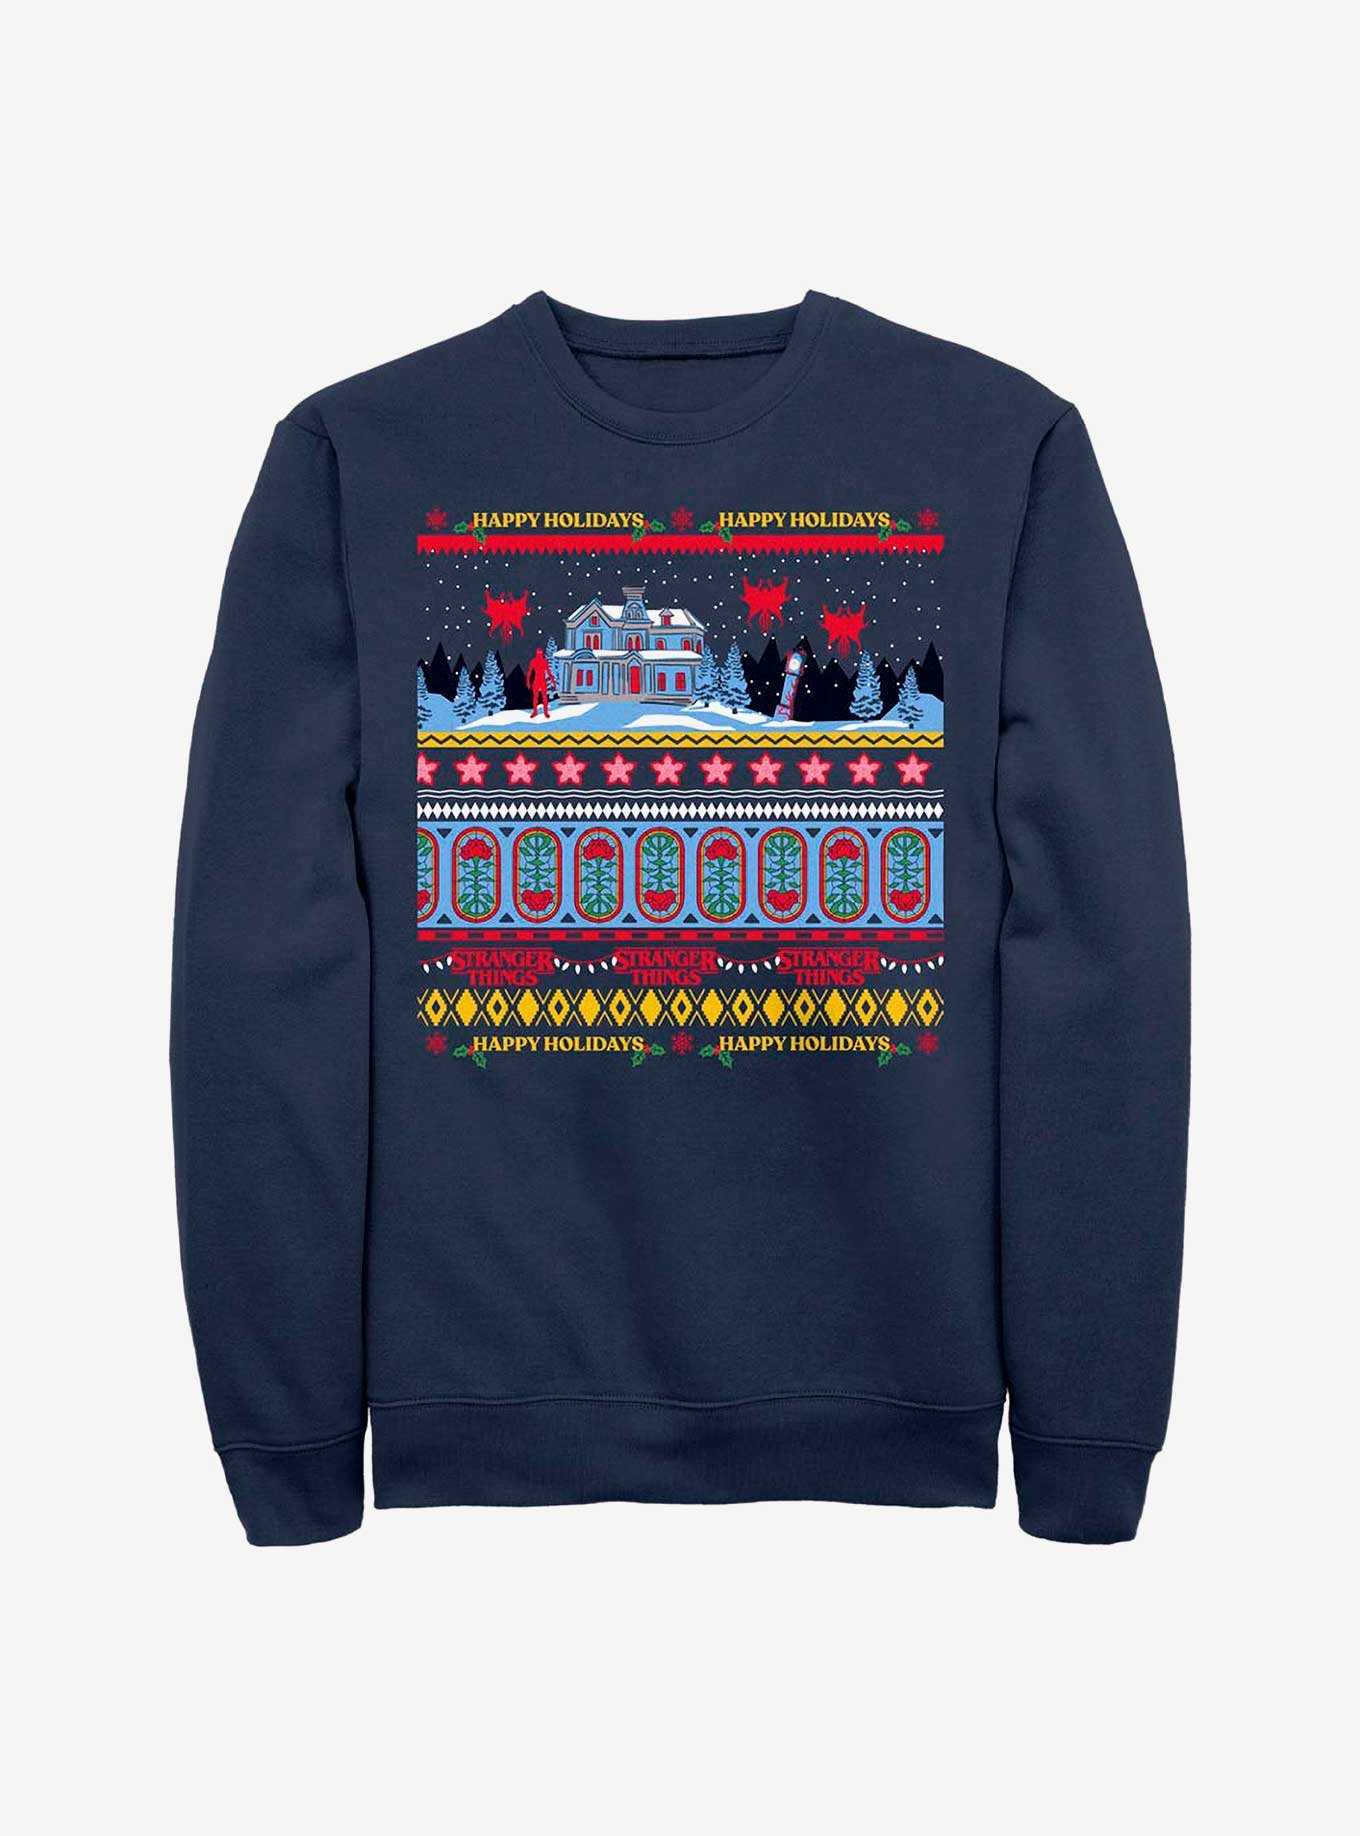 Stranger Things Creel House Ugly Sweater Sweatshirt, , hi-res